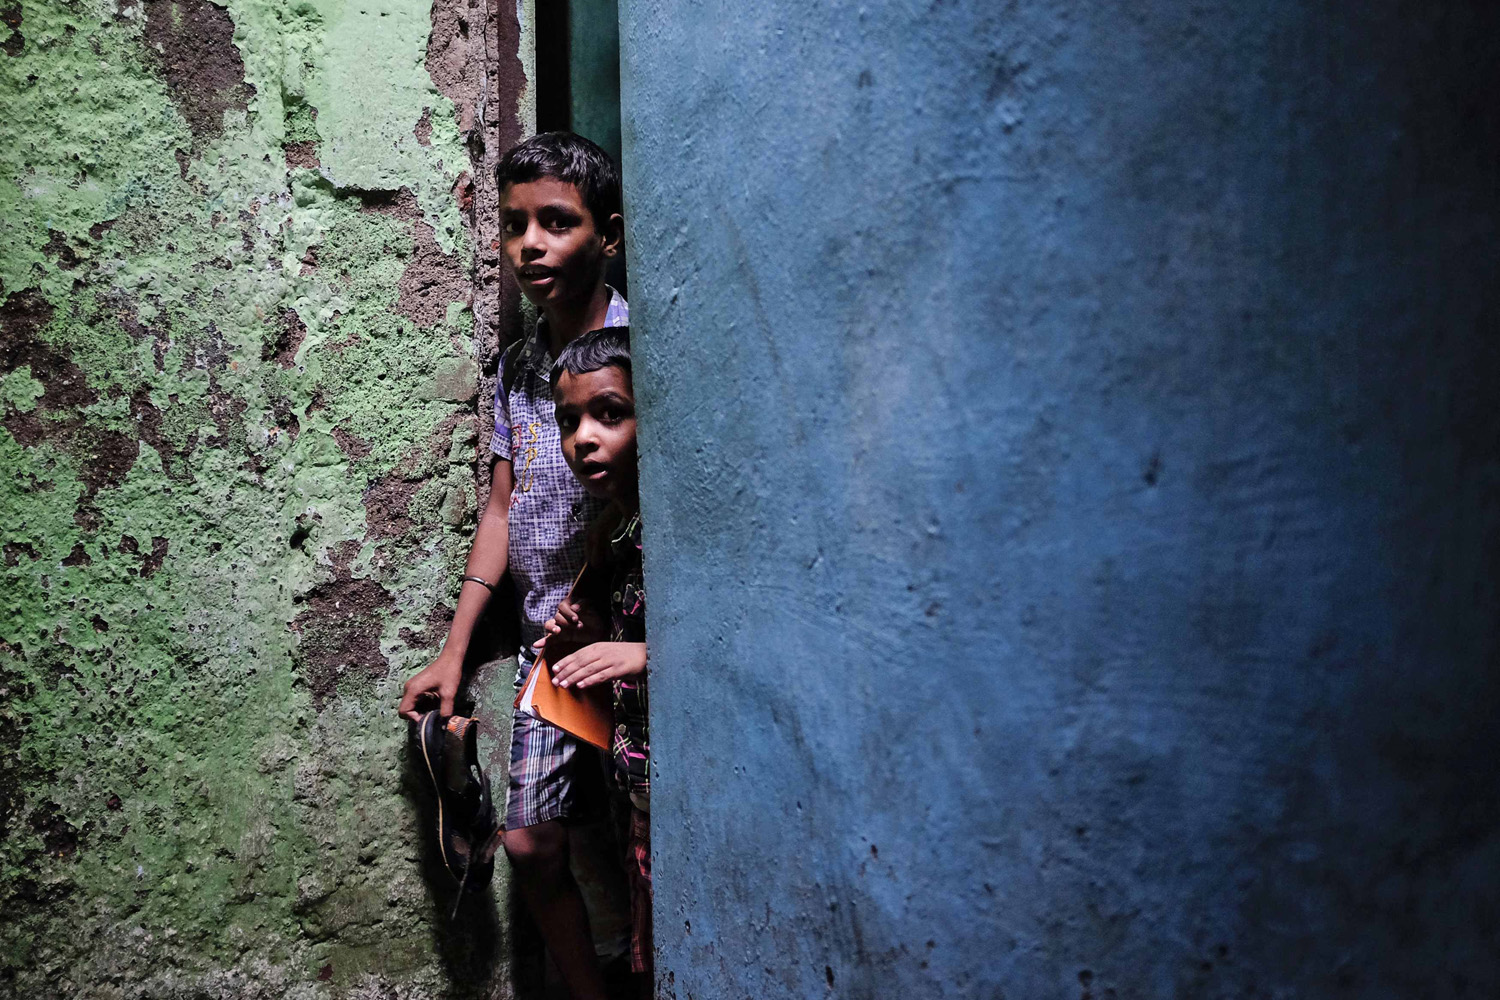 Schoolchildren walk through an alley after attending private tuition at a slum in Mumbai